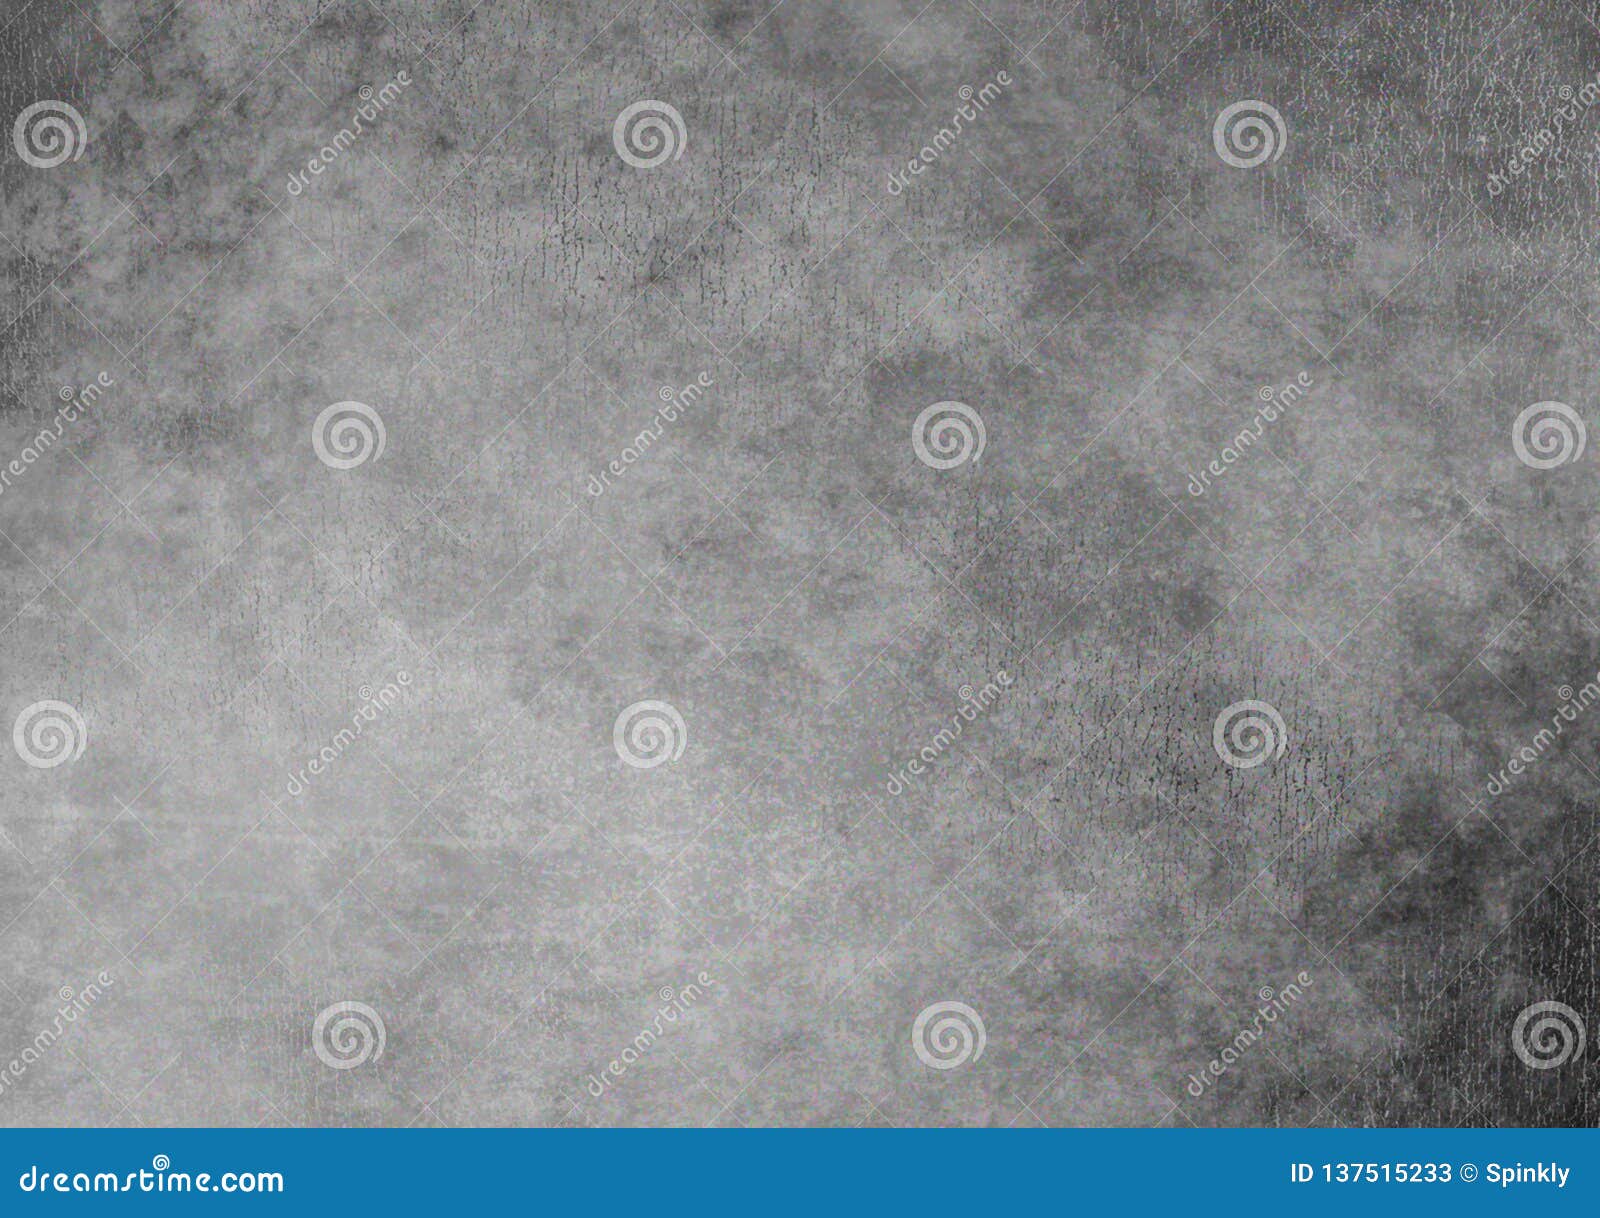 grey textured plain background wallpaper